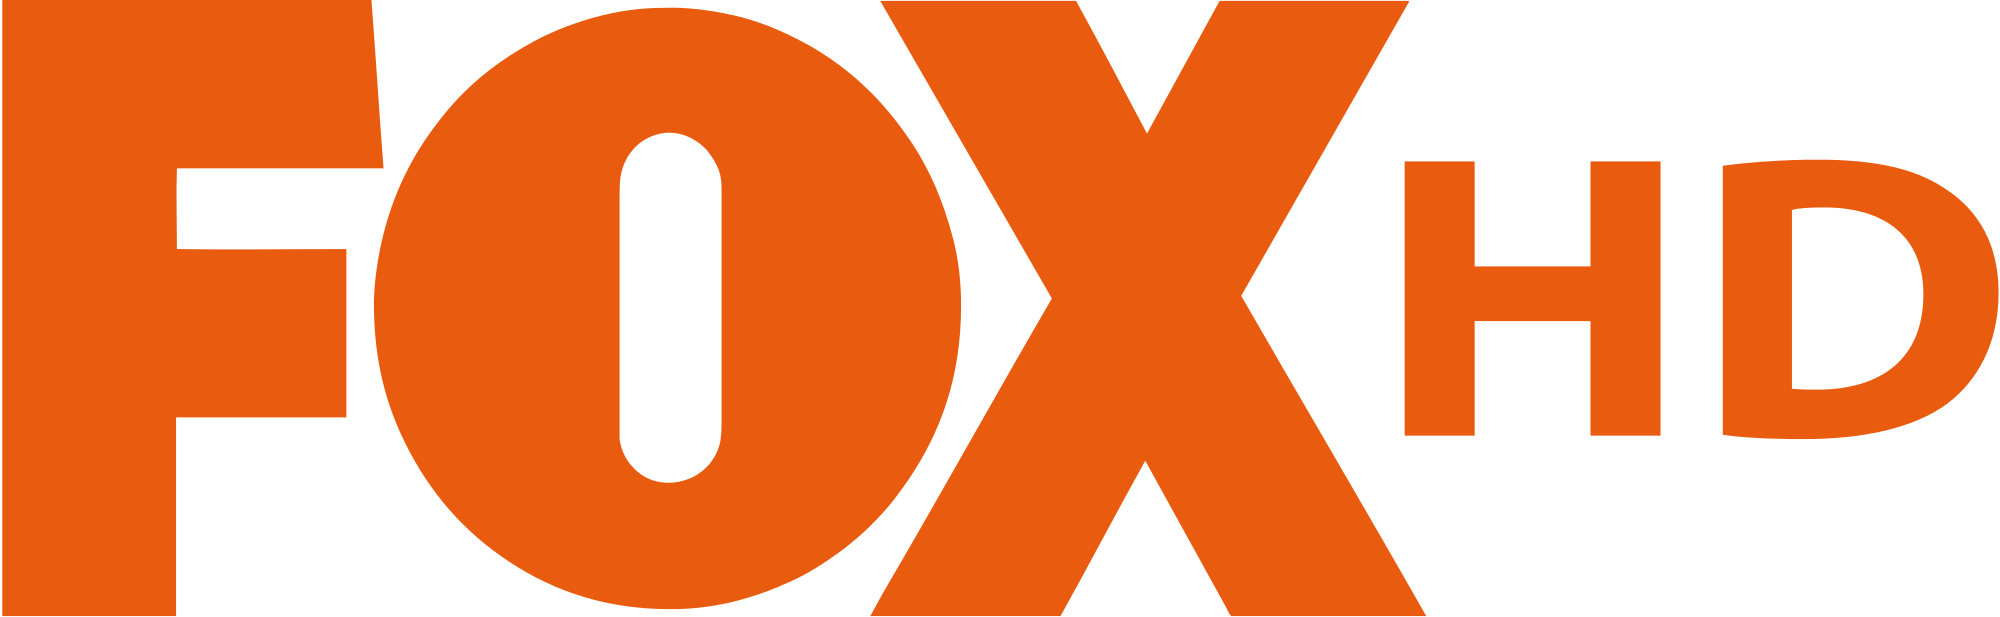 FOX HD LatAm.png